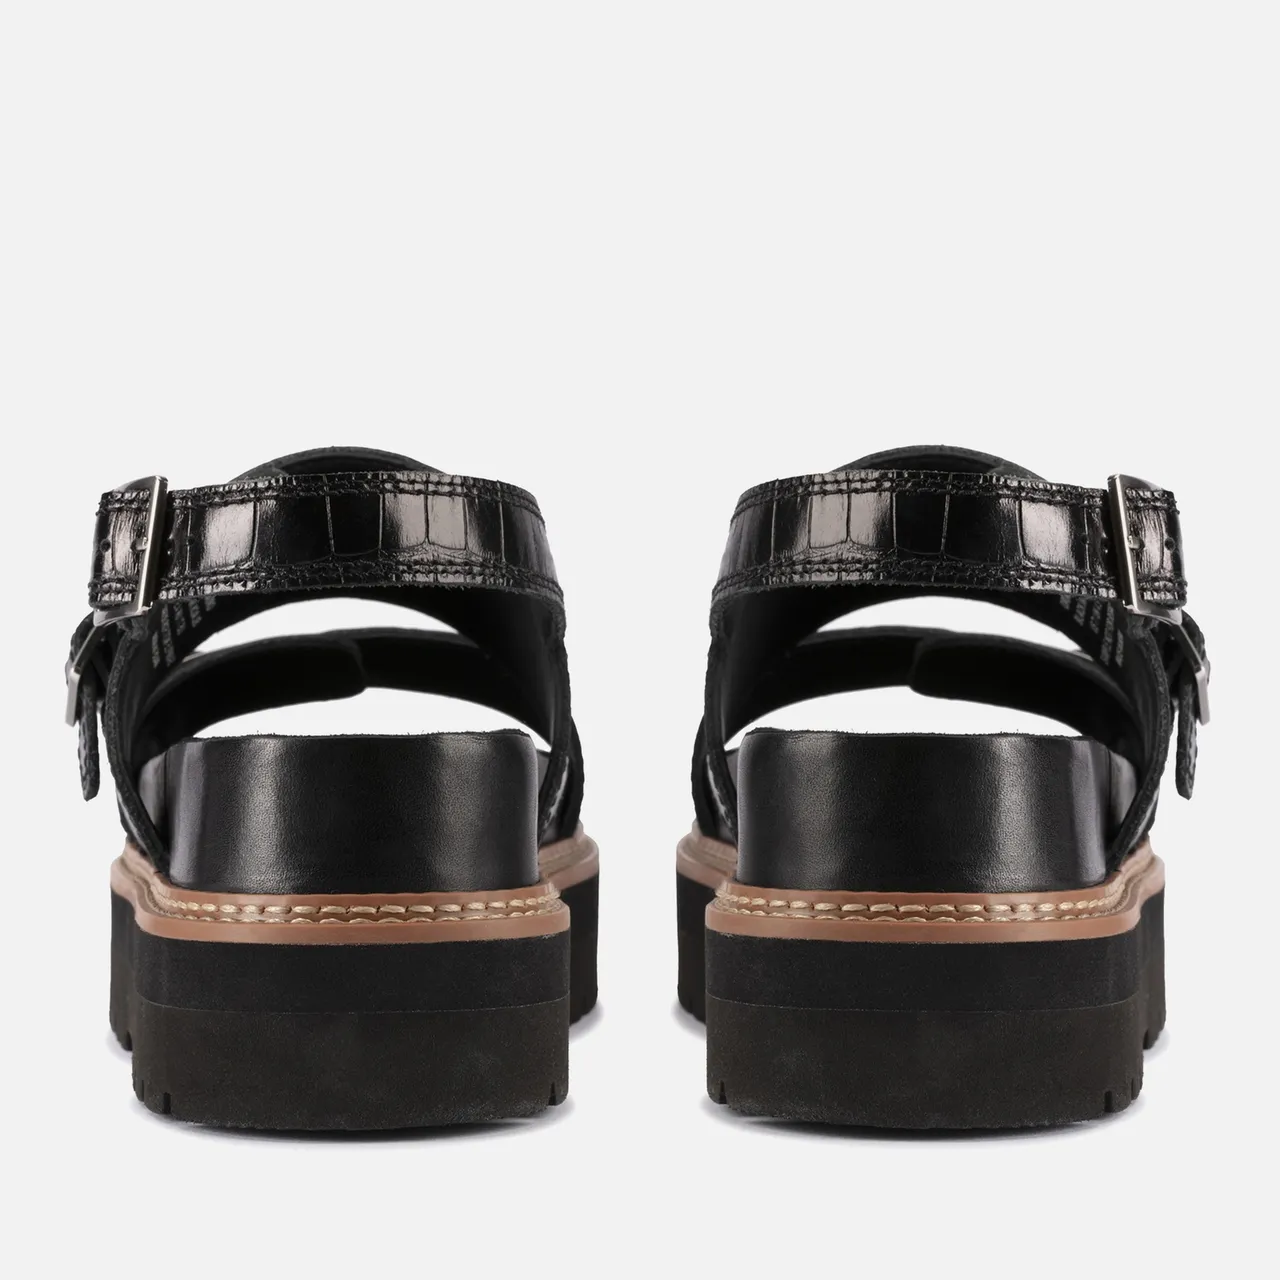 Clarks Women's Orianna Glide Cros-Effect Leather Sandals